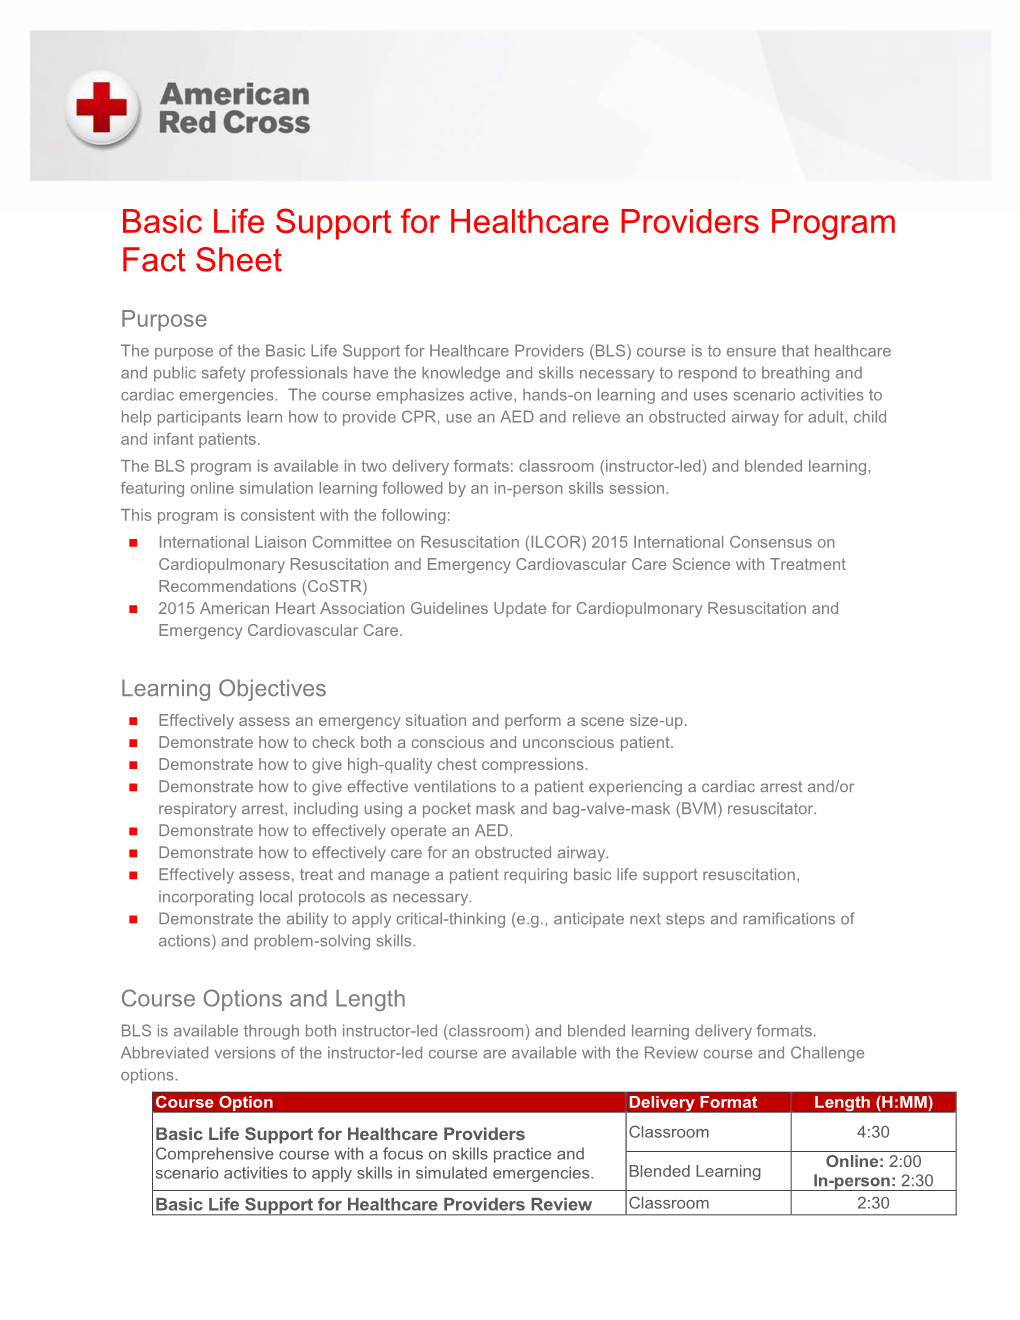 Basic Life Support for Healthcare Providers Program Fact Sheet